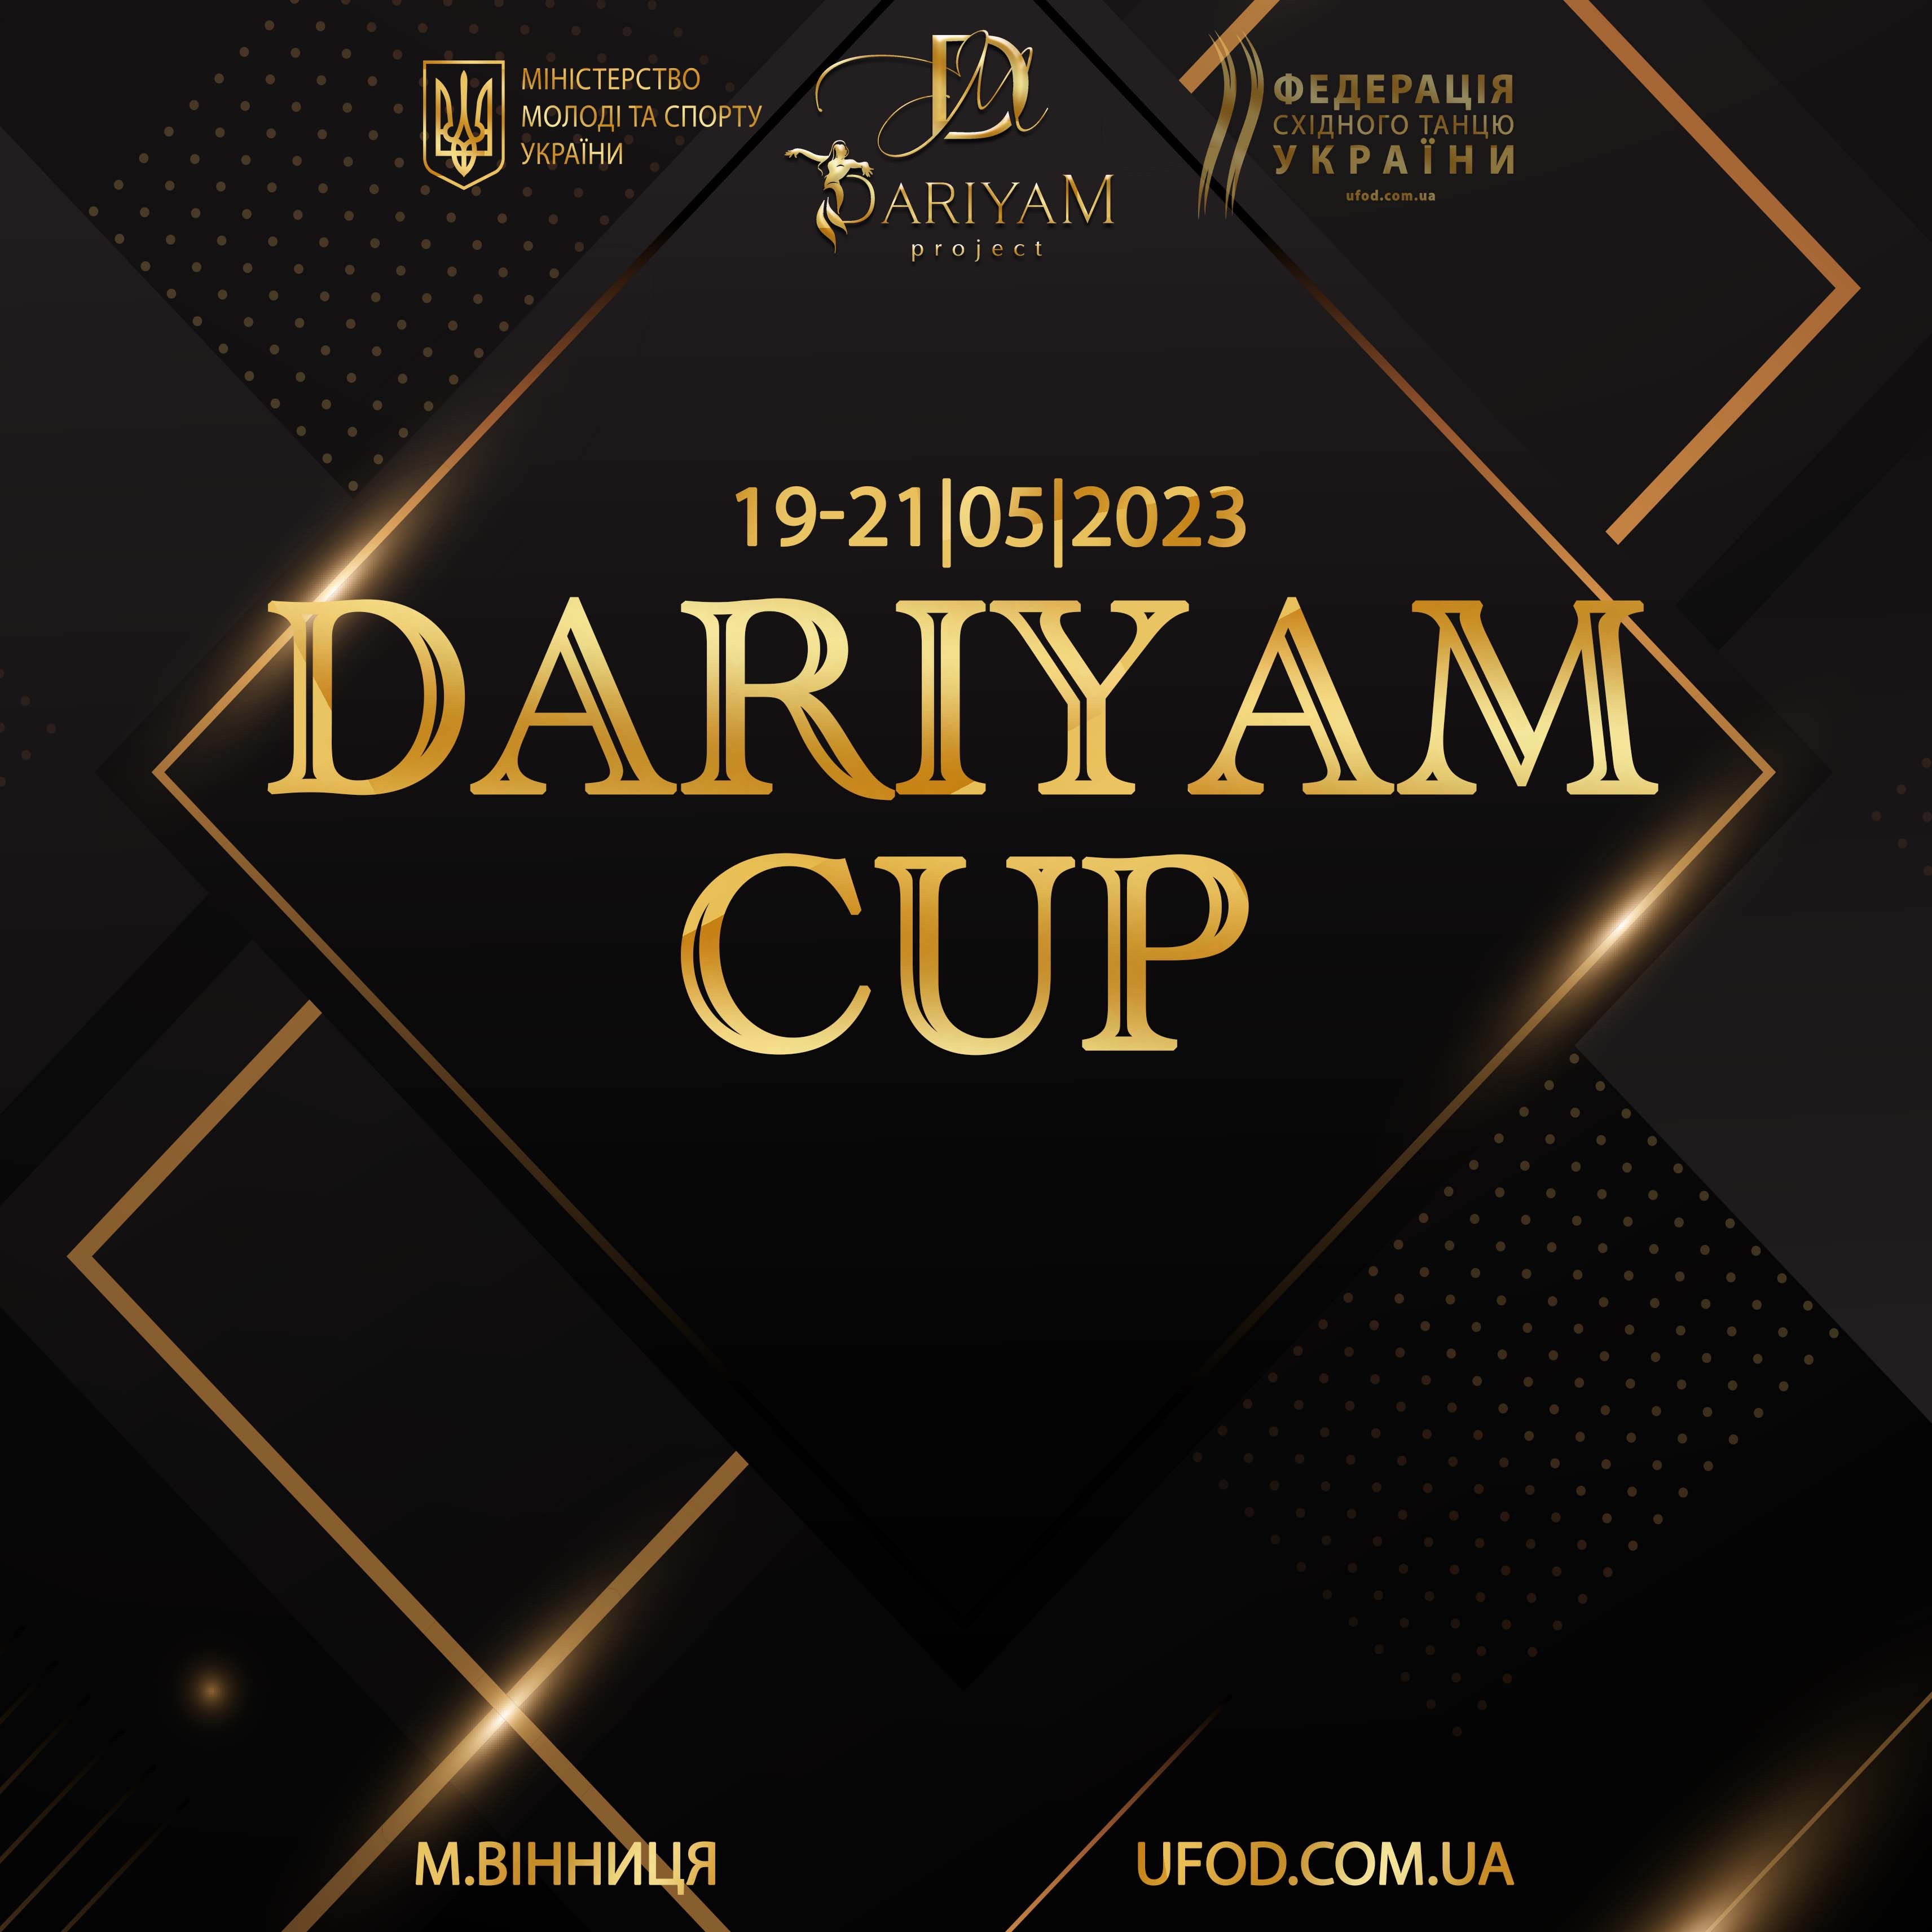 DariyaM Cup -2023